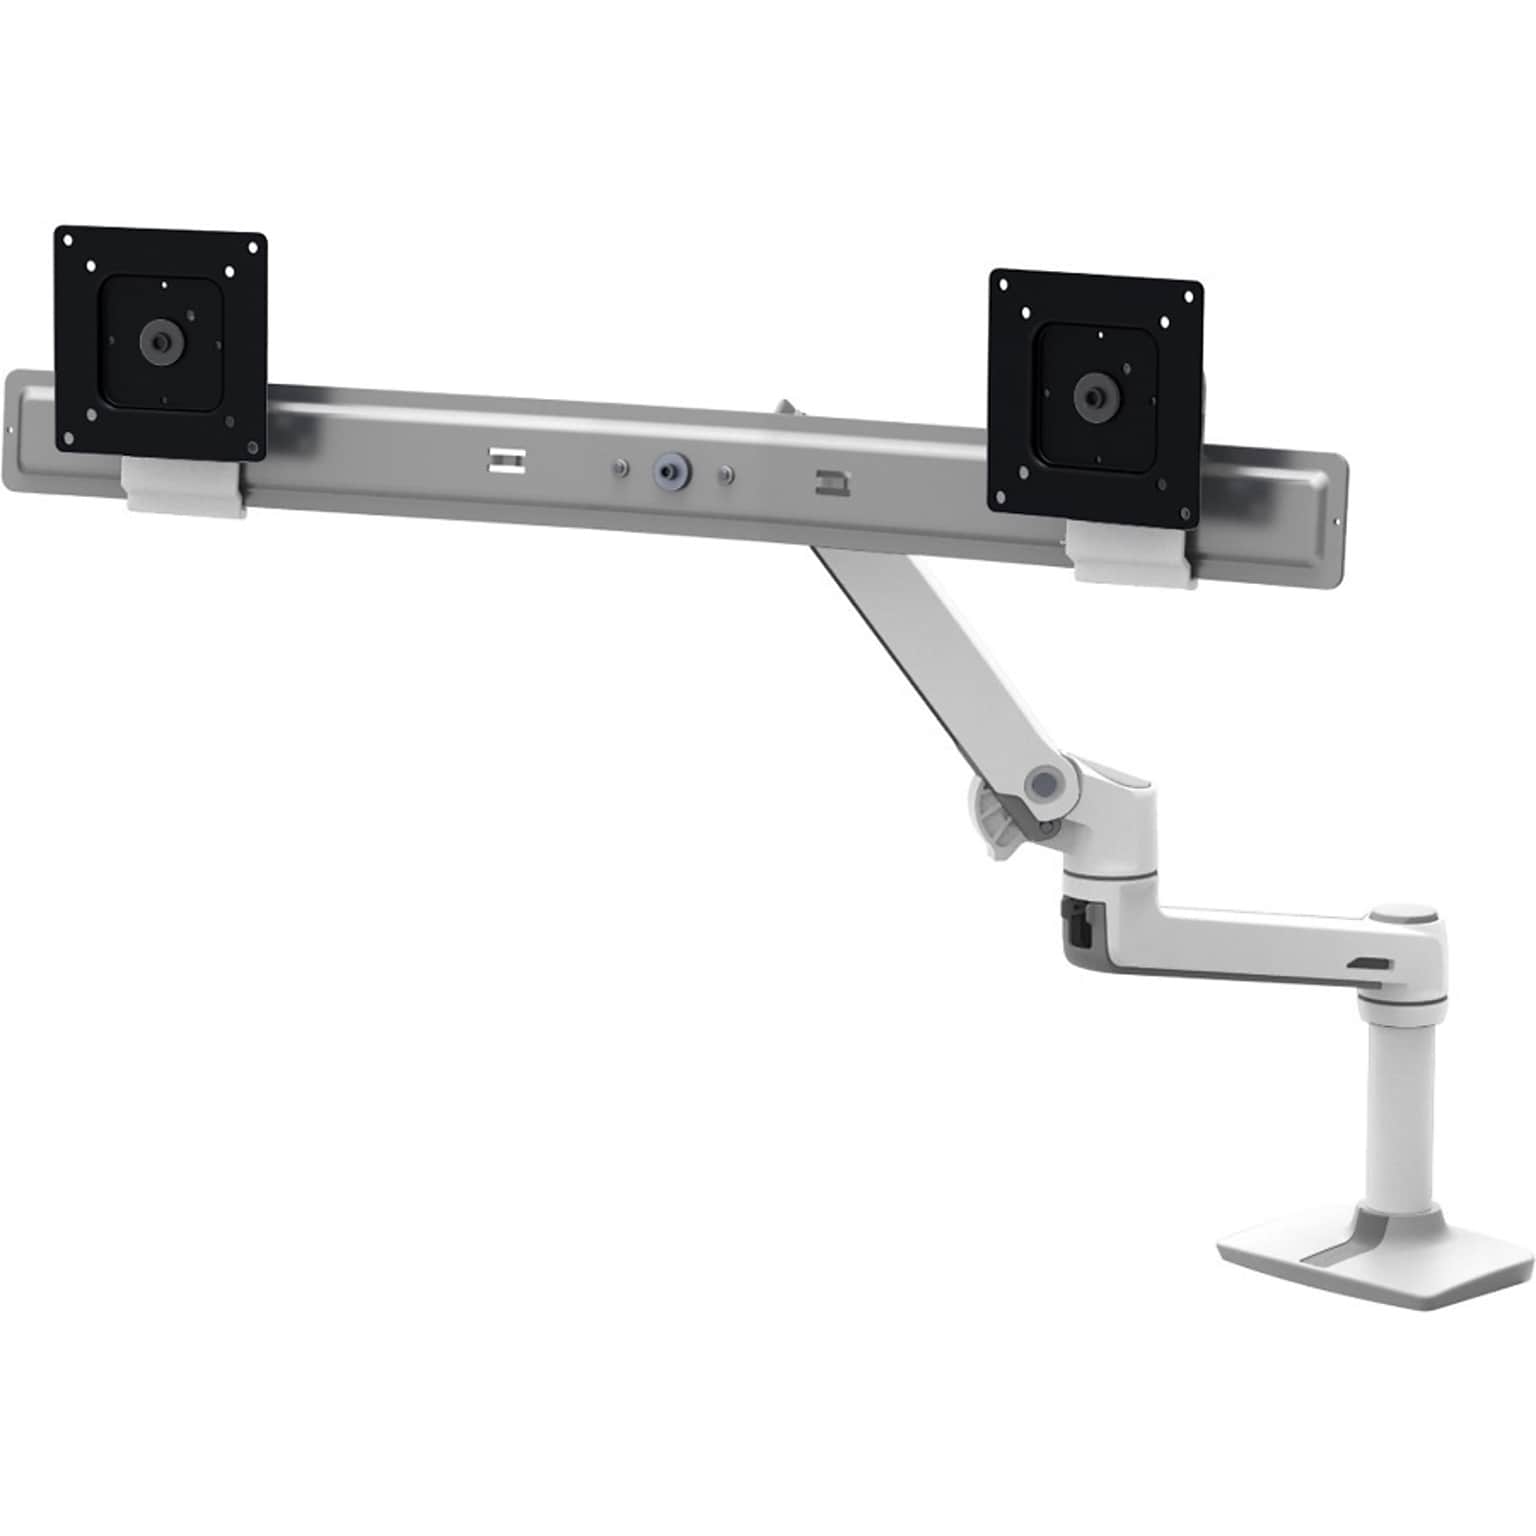 Ergotron LX Dual Adjustable Direct Arms Desk Mount, 25 Screen Support, Polished Aluminum (45-489-026)